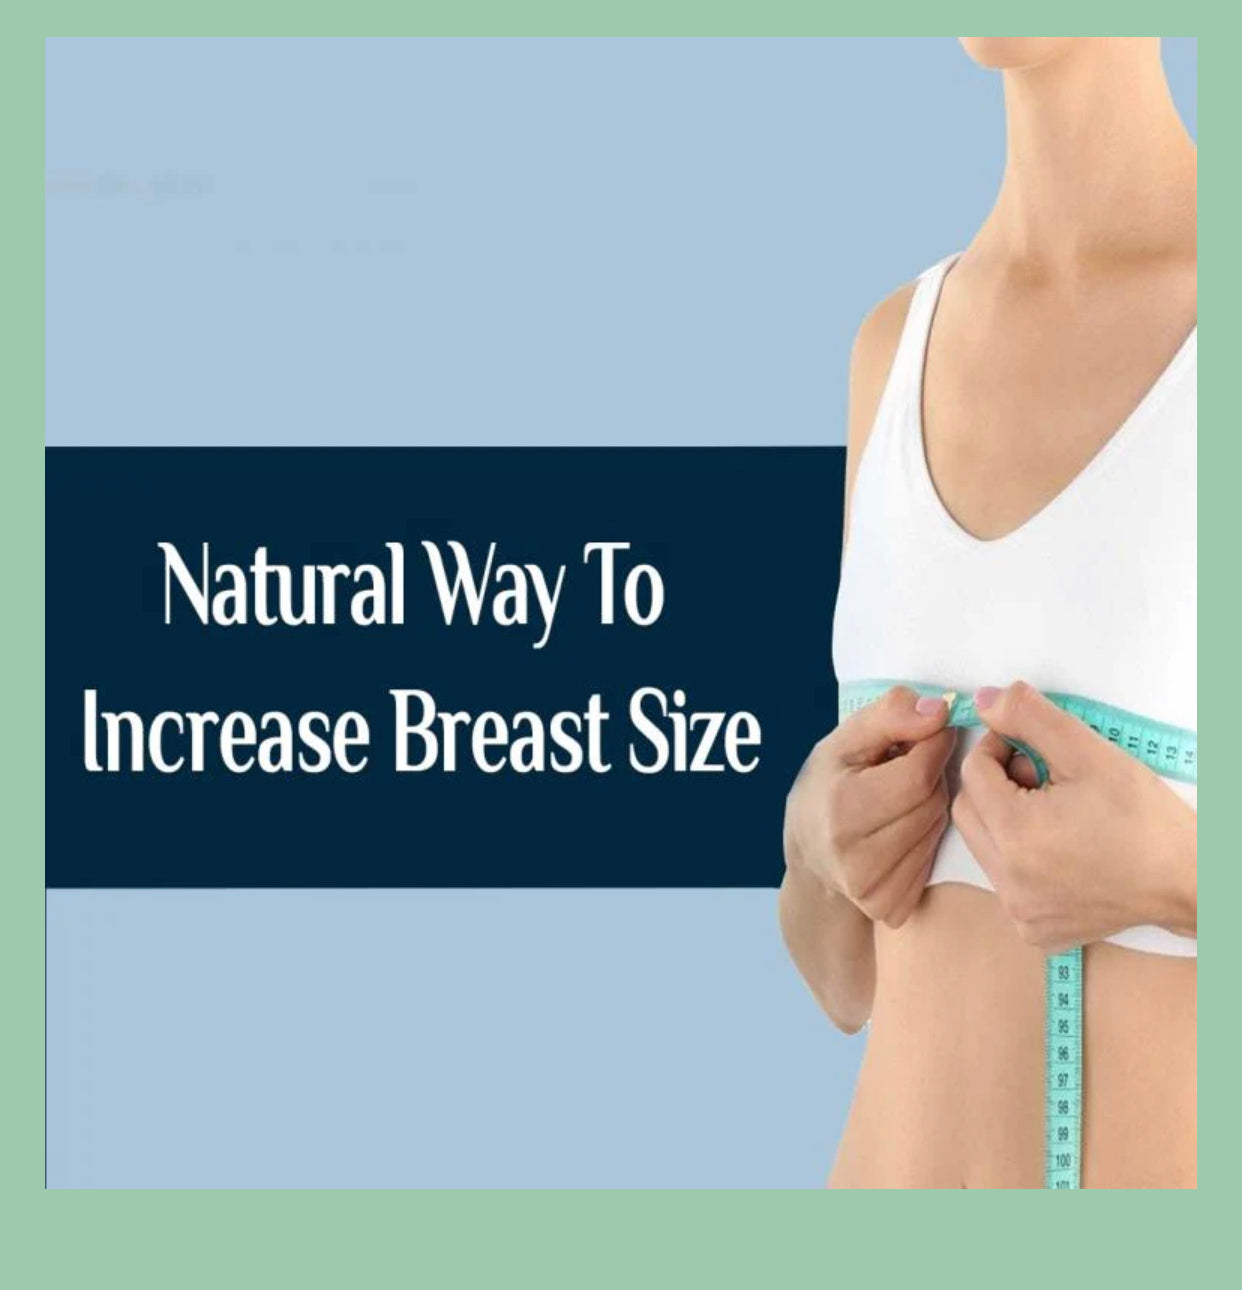 Breast Enlargement Kit